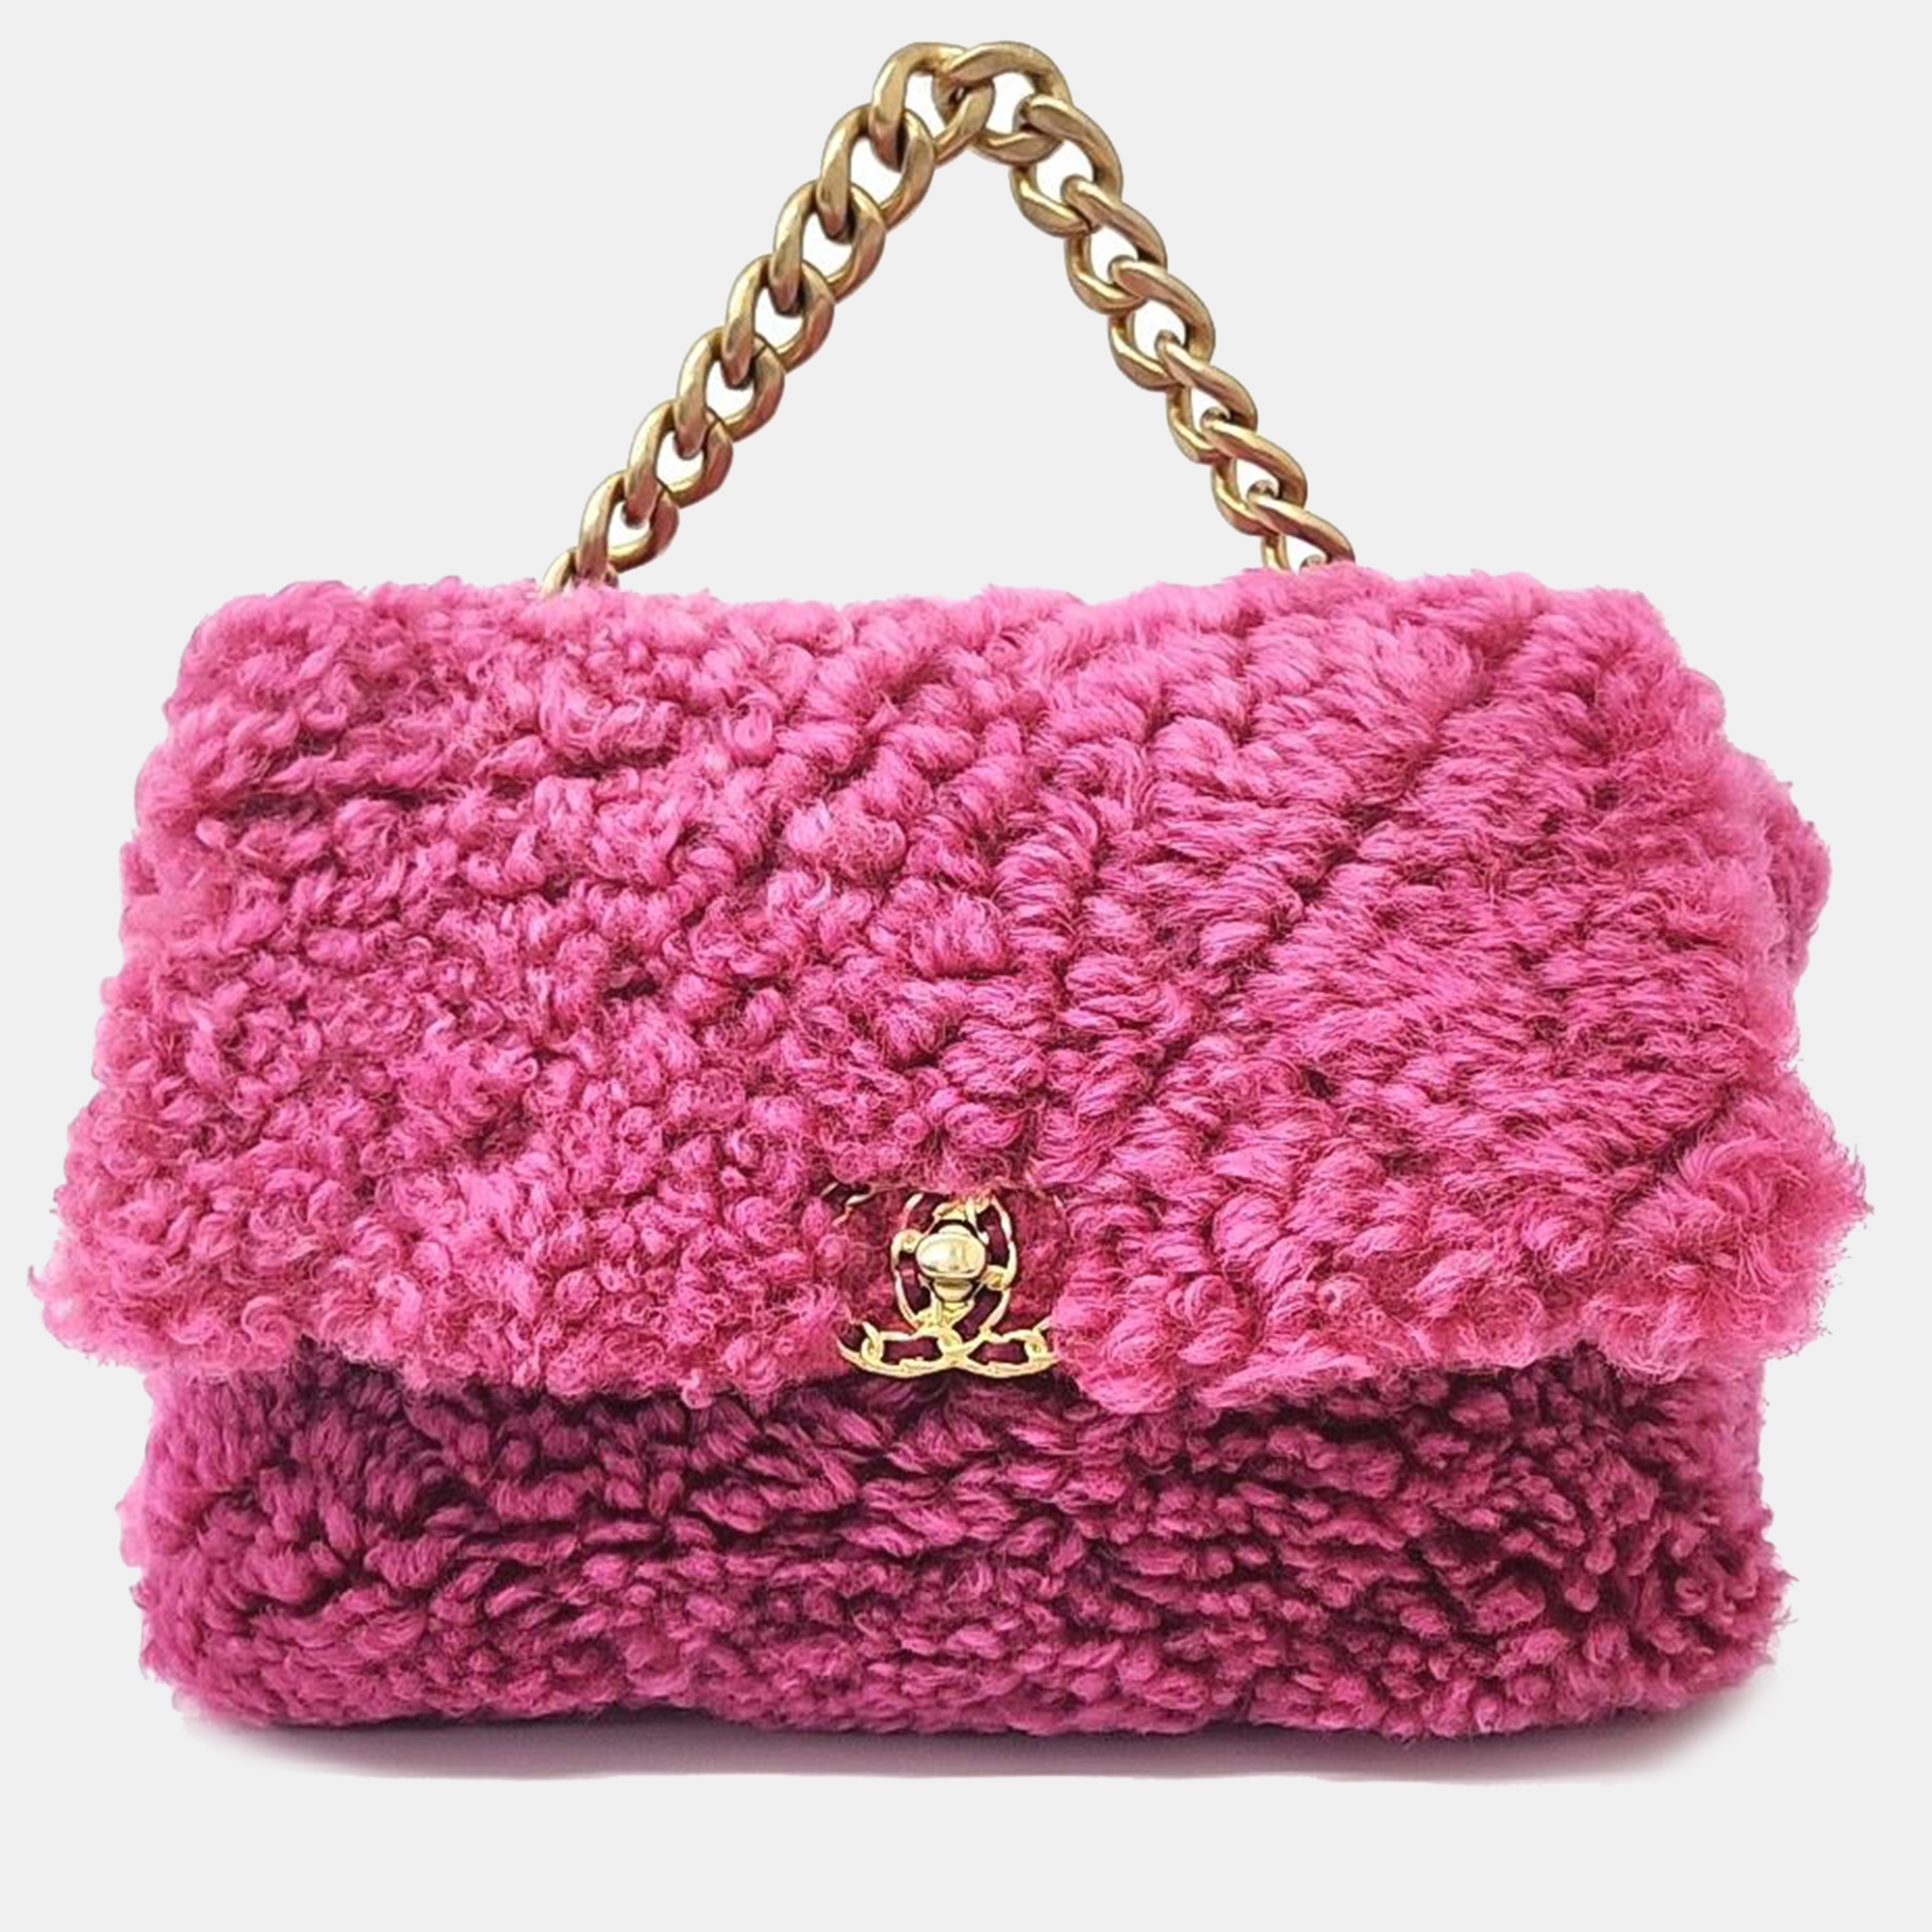 Chanel pink fur shearling 19 flap bag